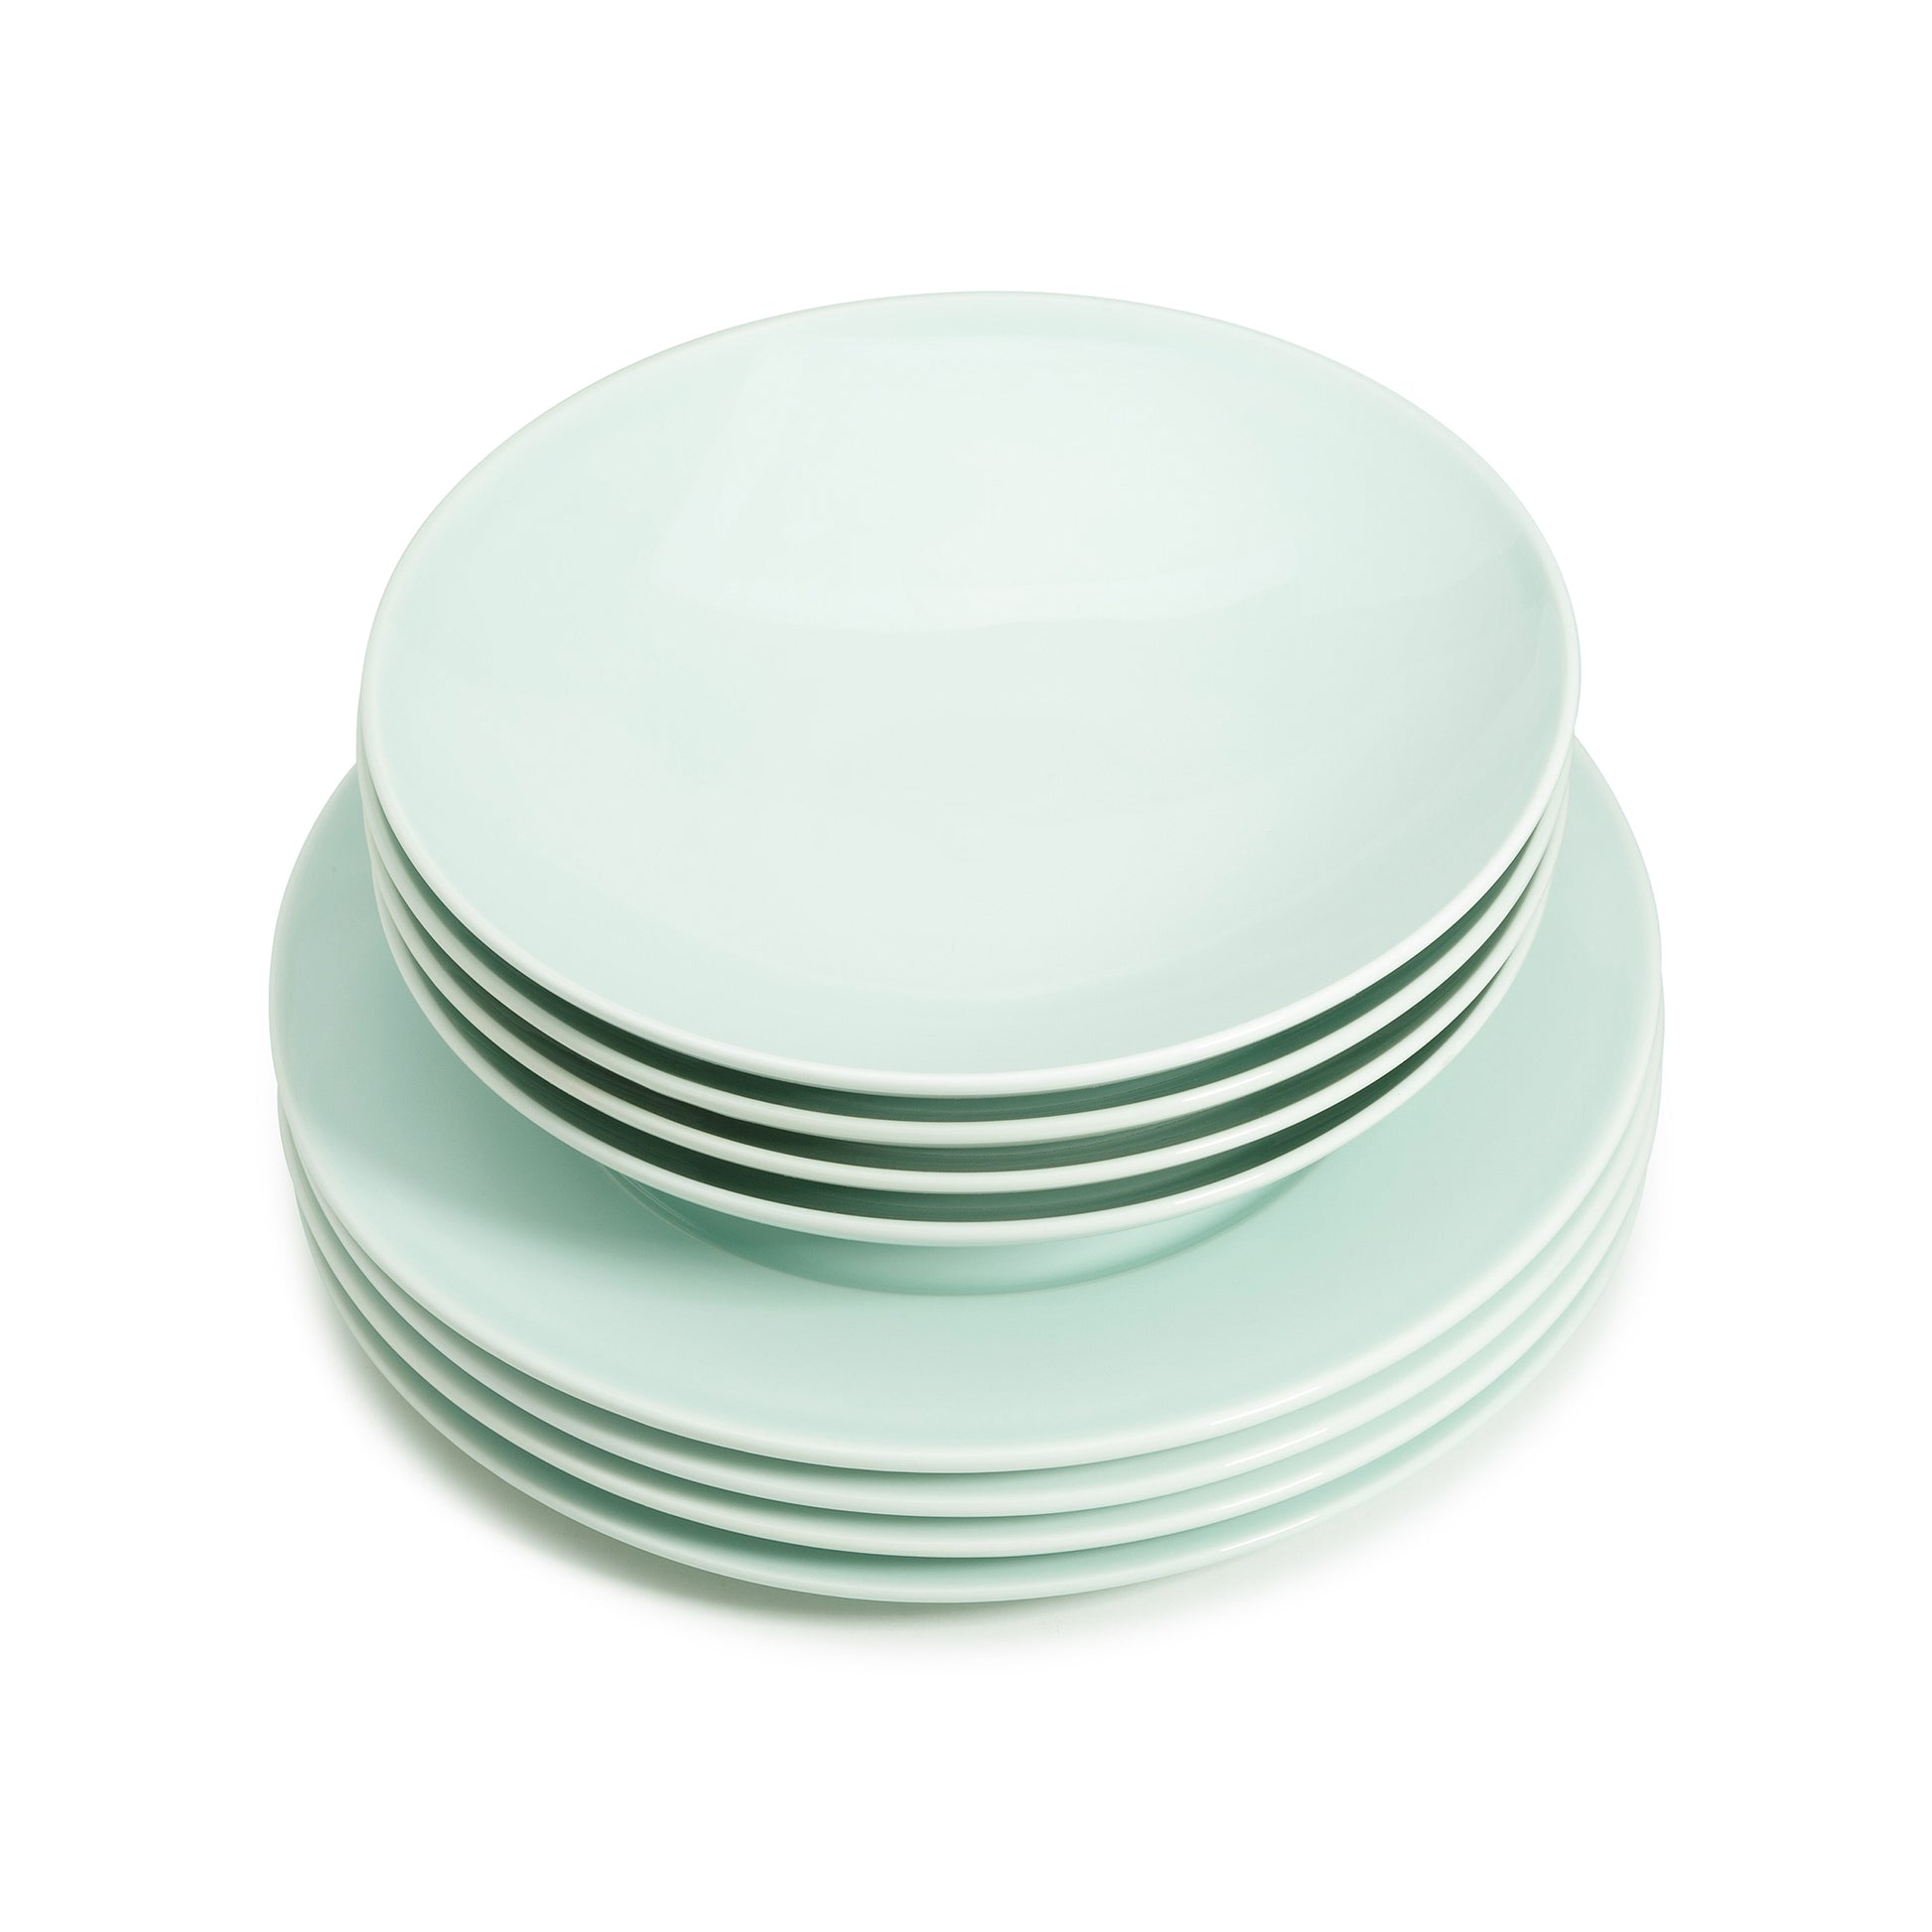 8 piece green celadon porcelain dinnerware set, 11 3/4" wide rim dinner plates, 9" salad/soup bowls, media 3 of 6